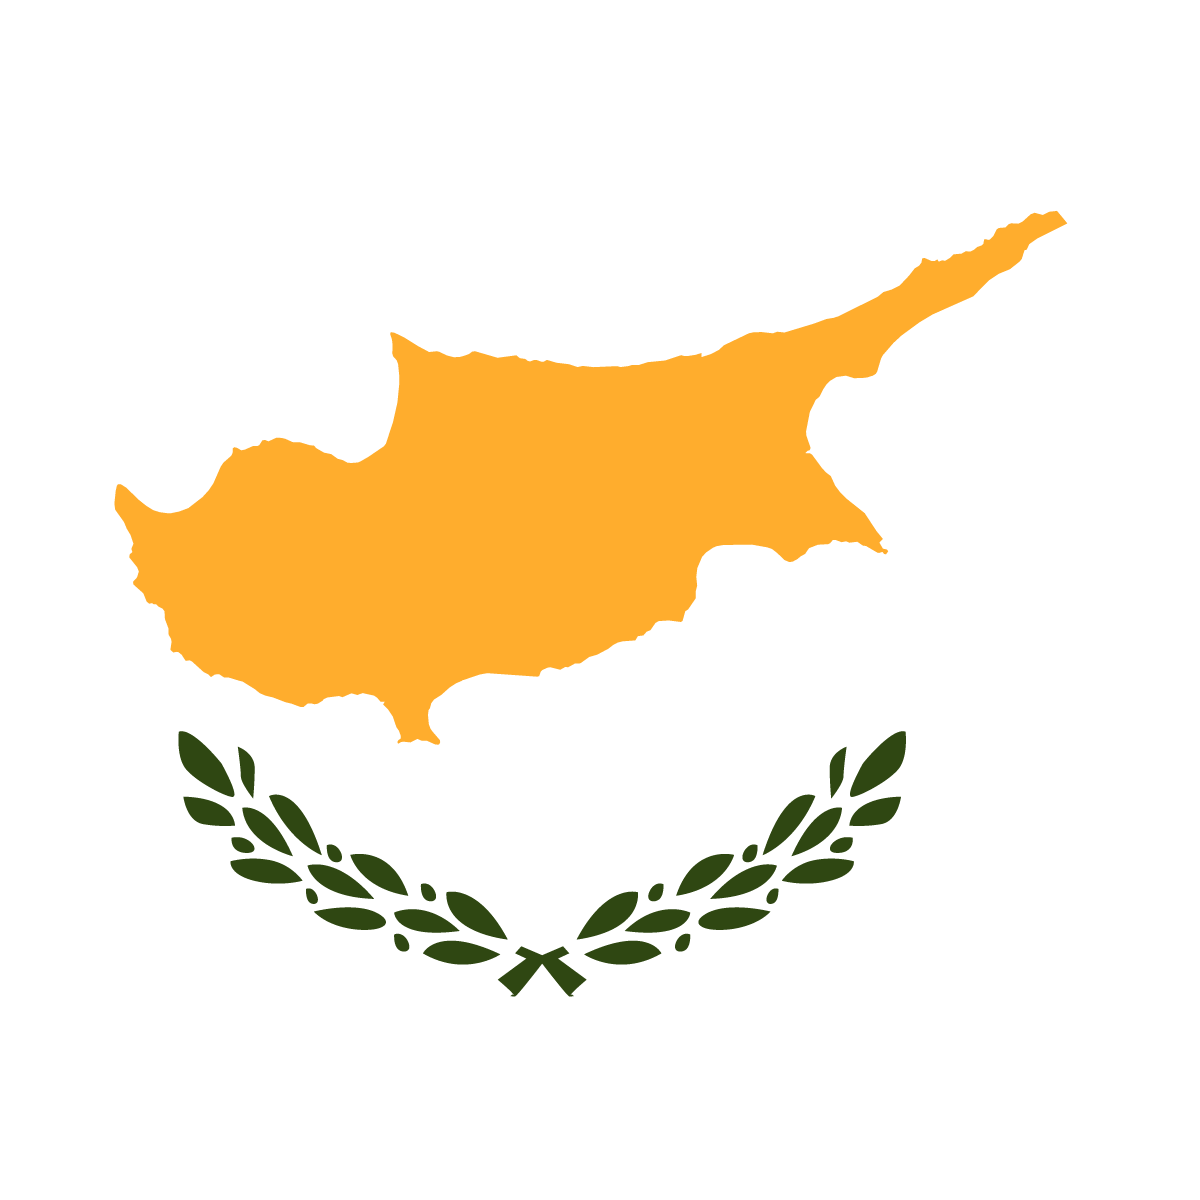 Copy of Copy of Copy of Copy of Copy of Copy of Cyprus